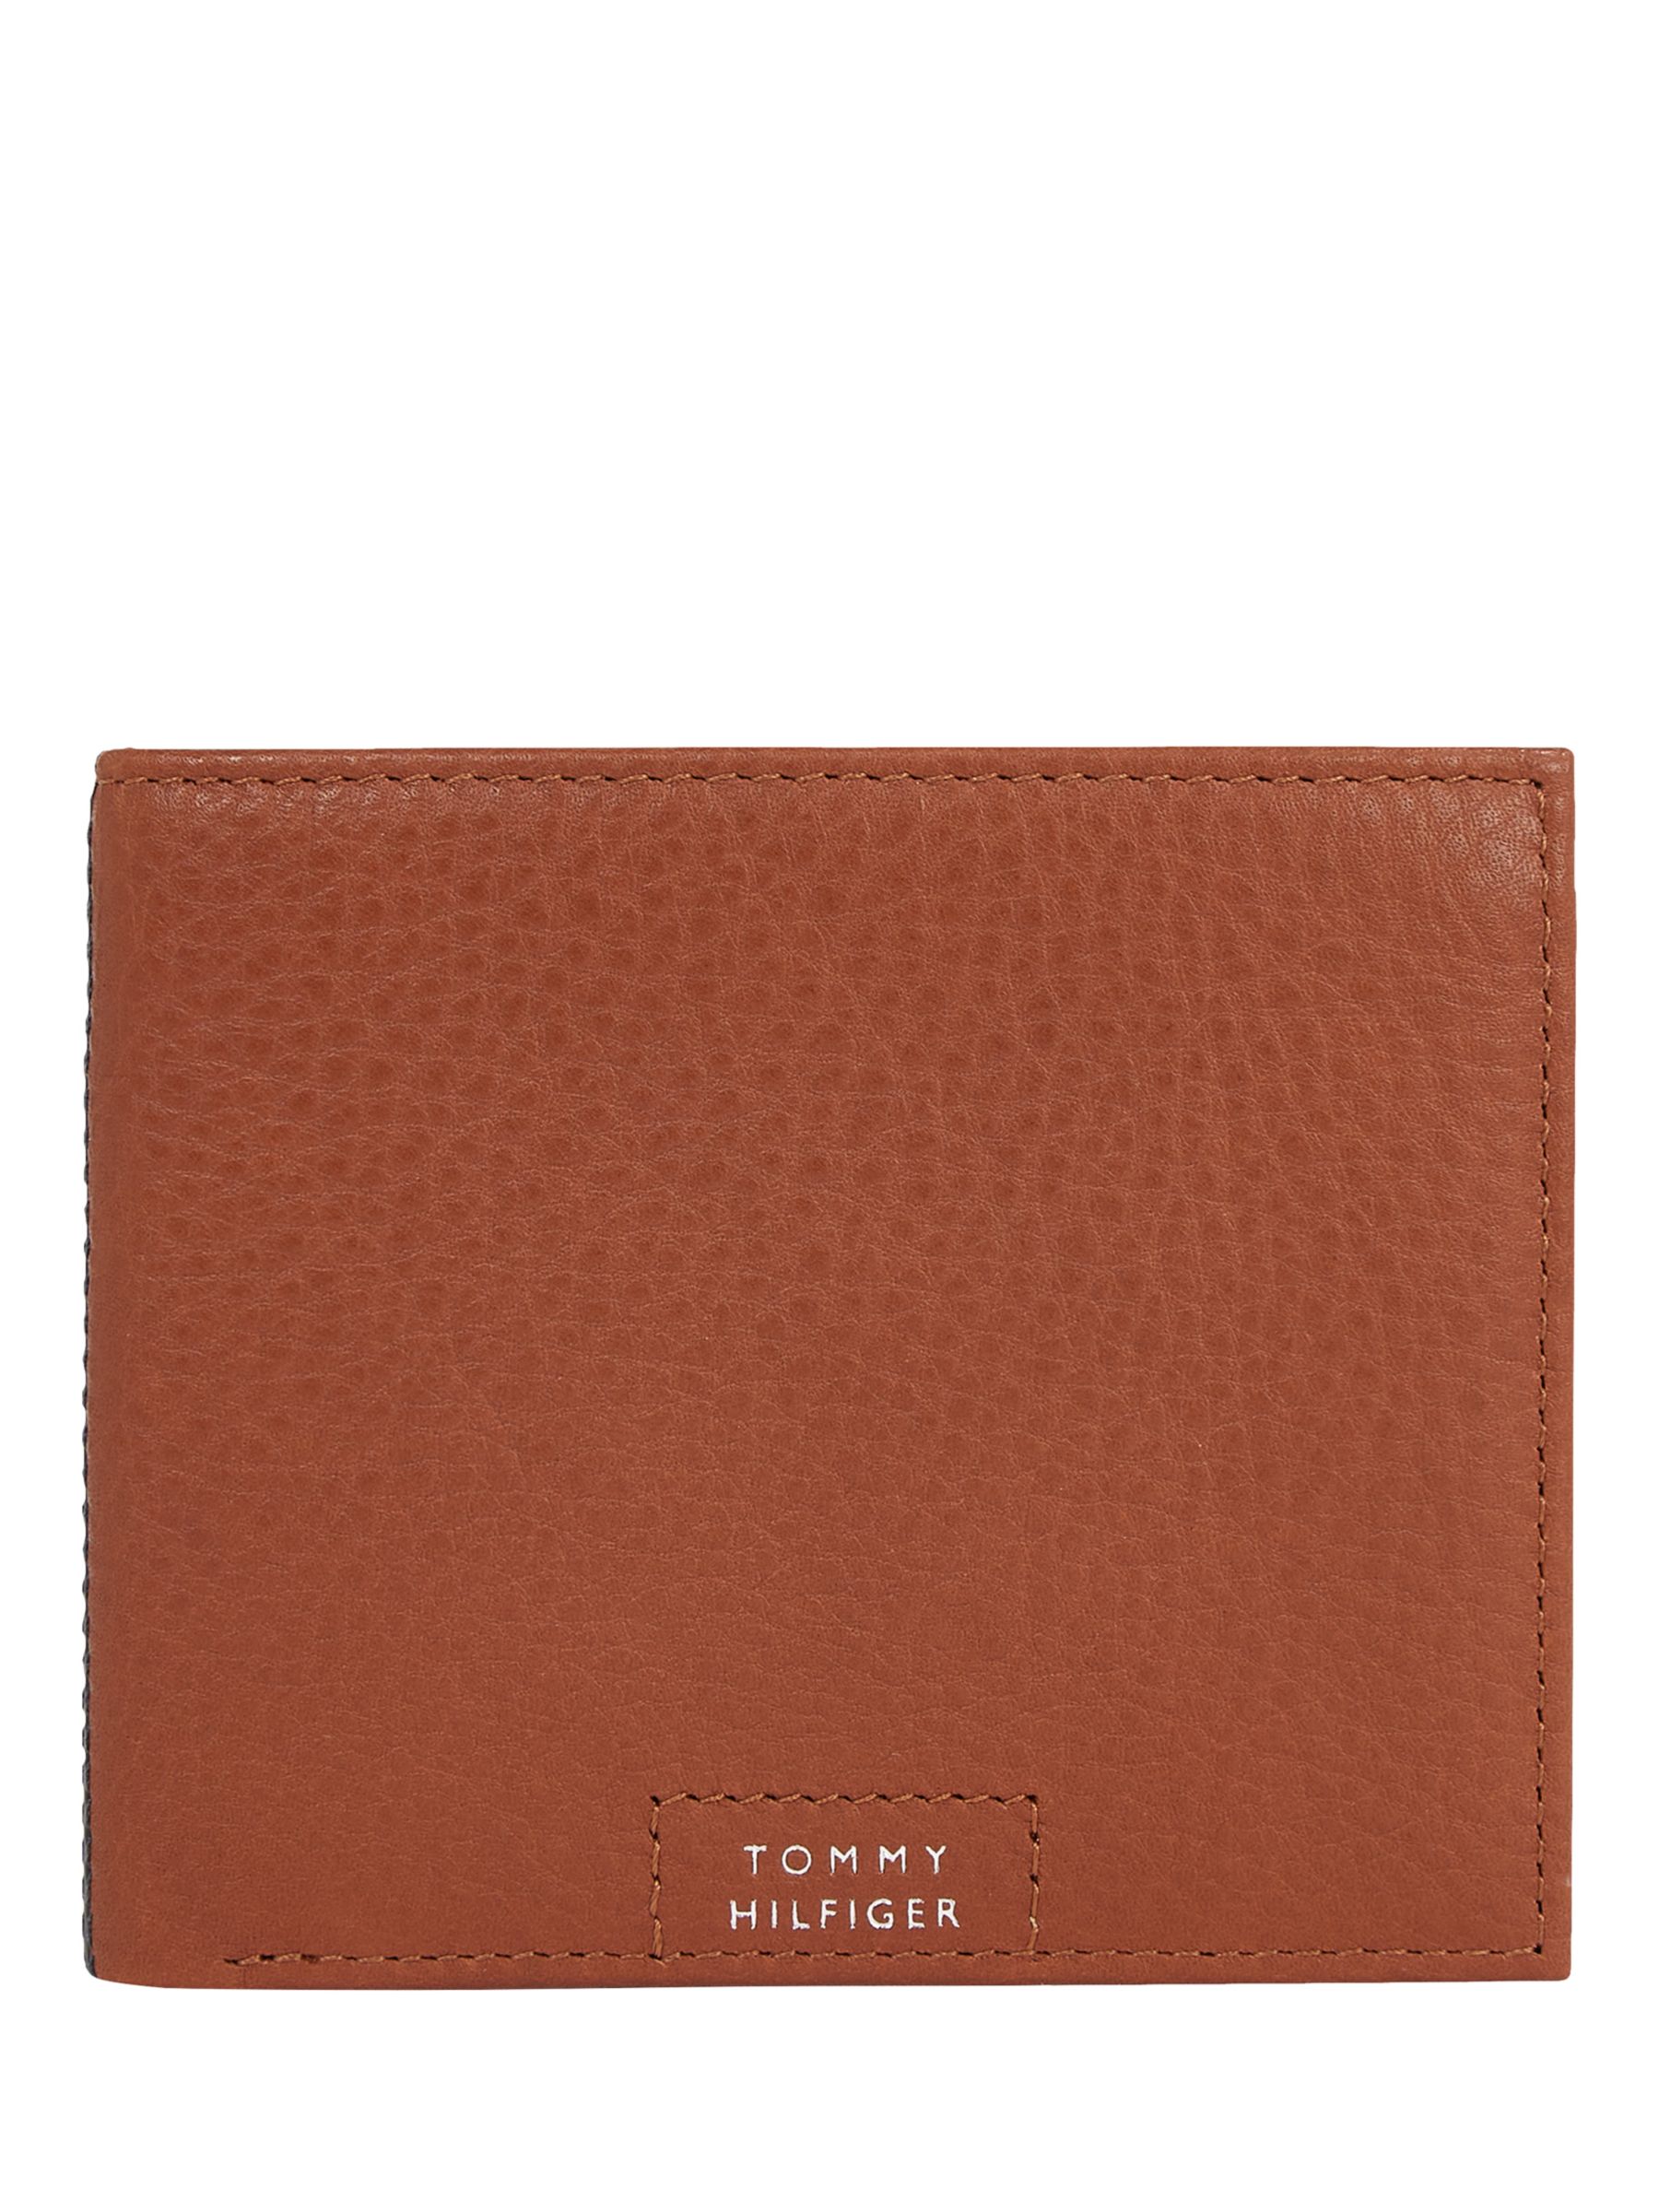 Tommy Hilfiger Leather Wallet